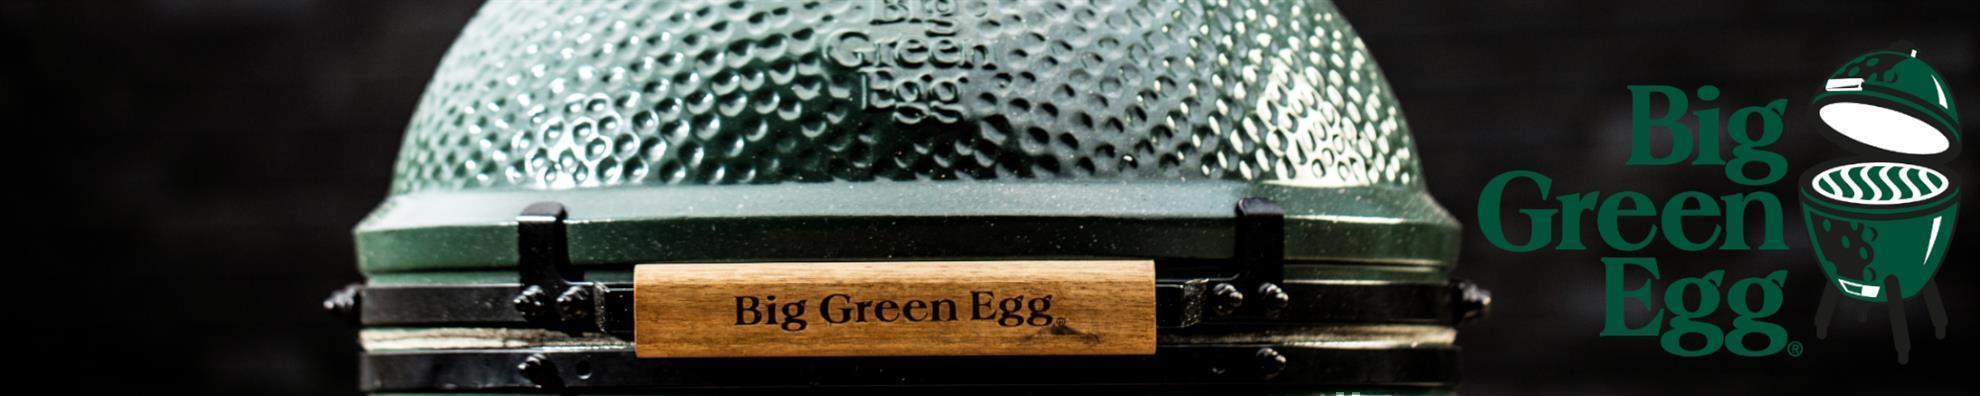 Big Green Egg - Small